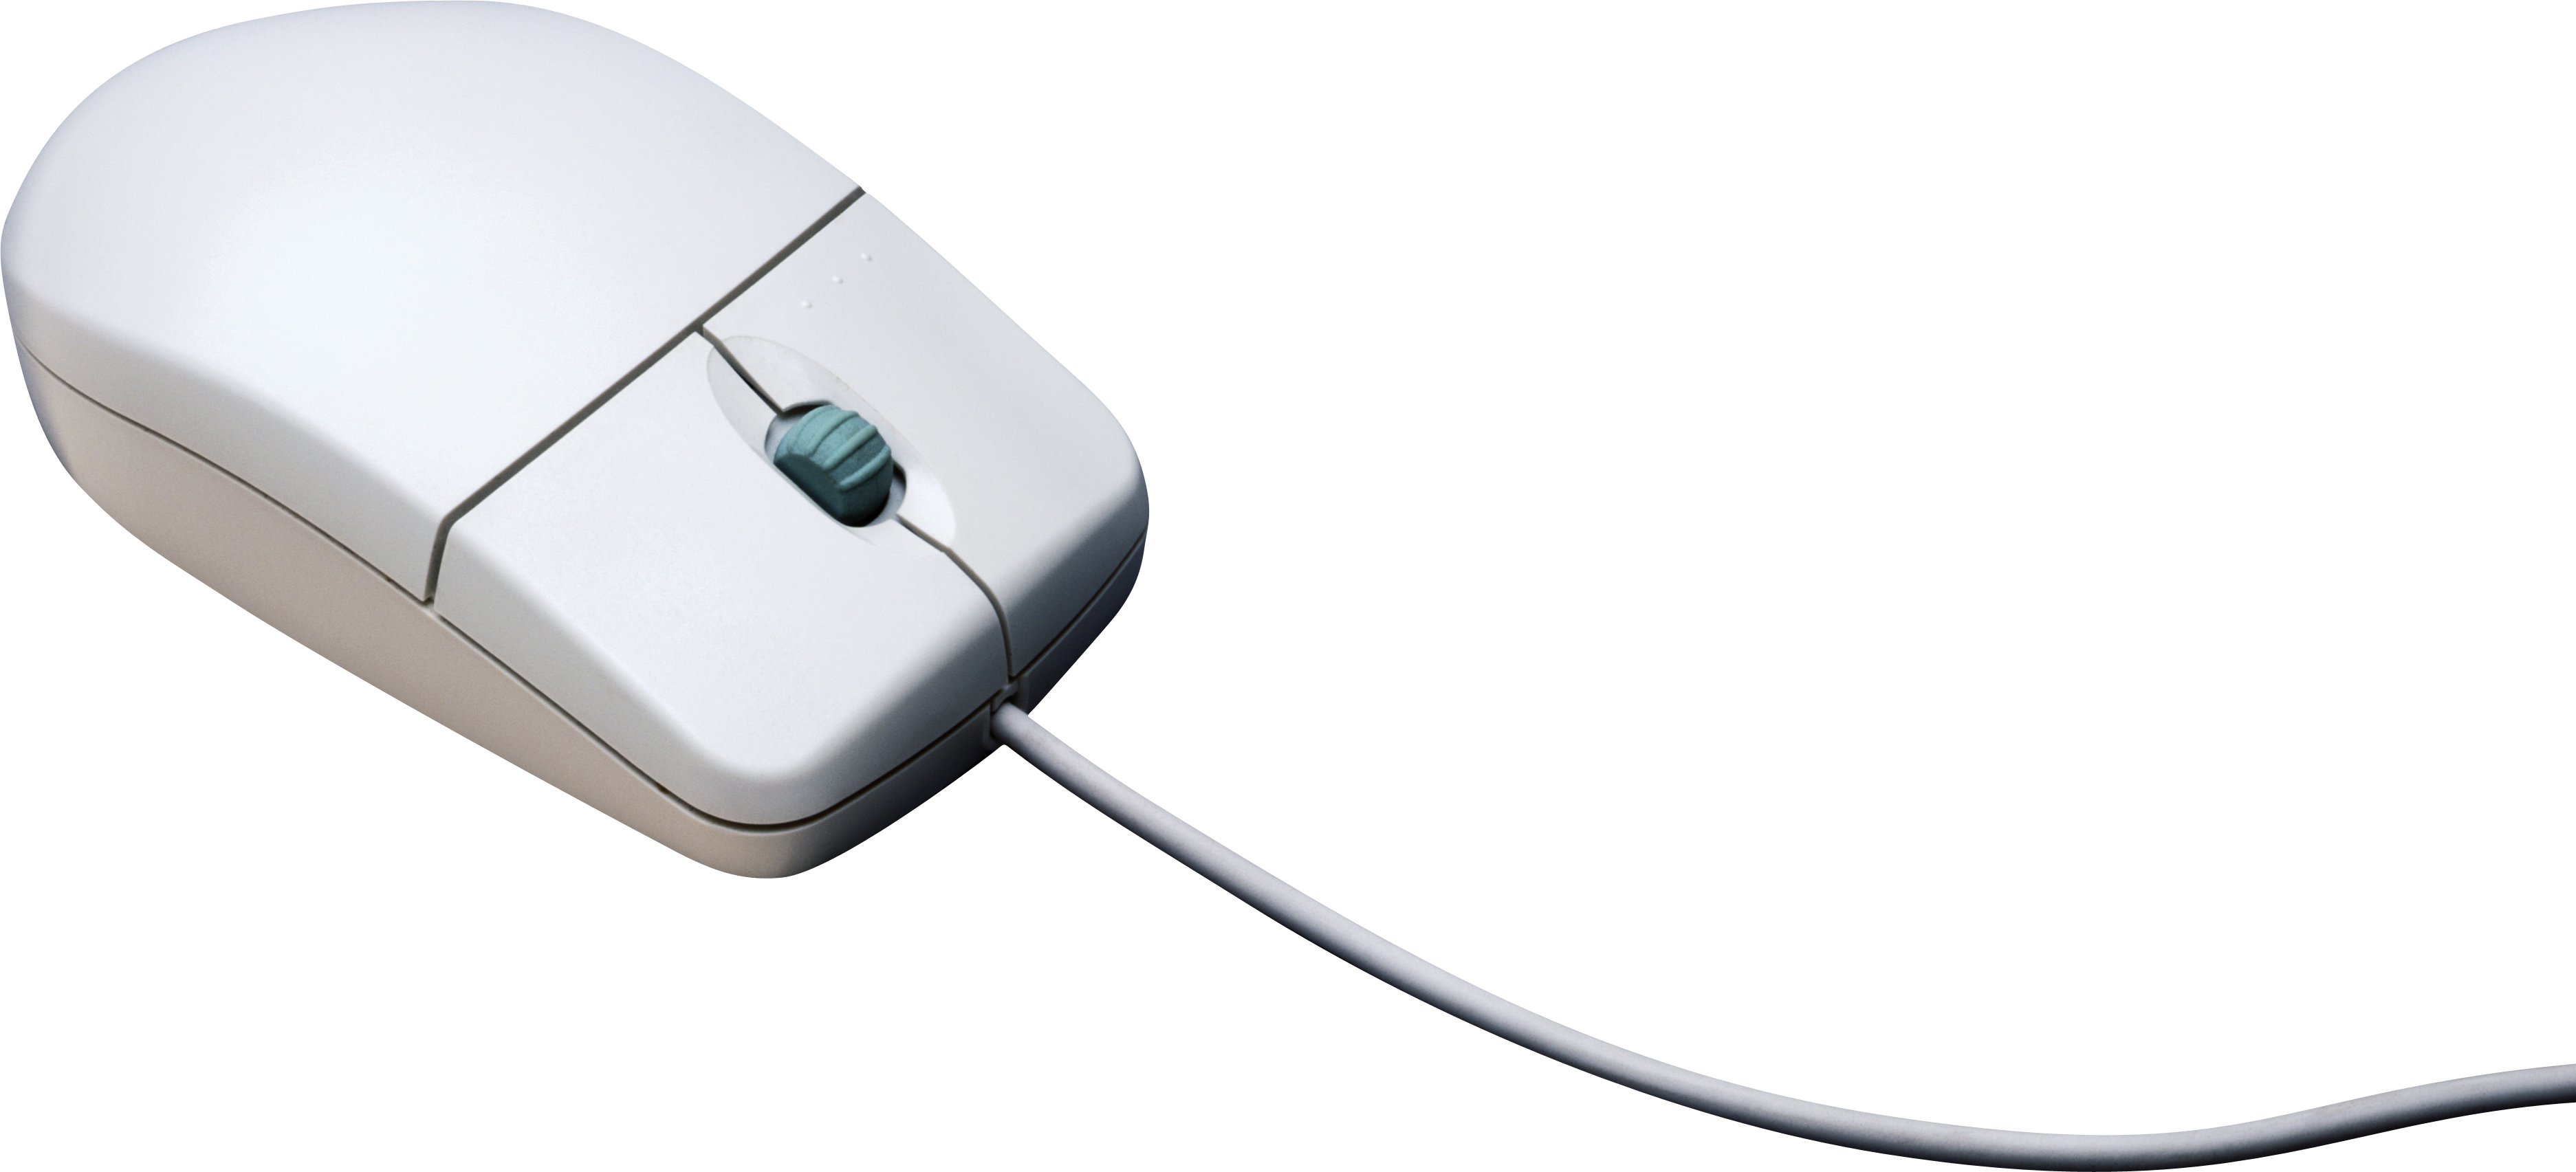 Computer Mouse PNG Transparent Image